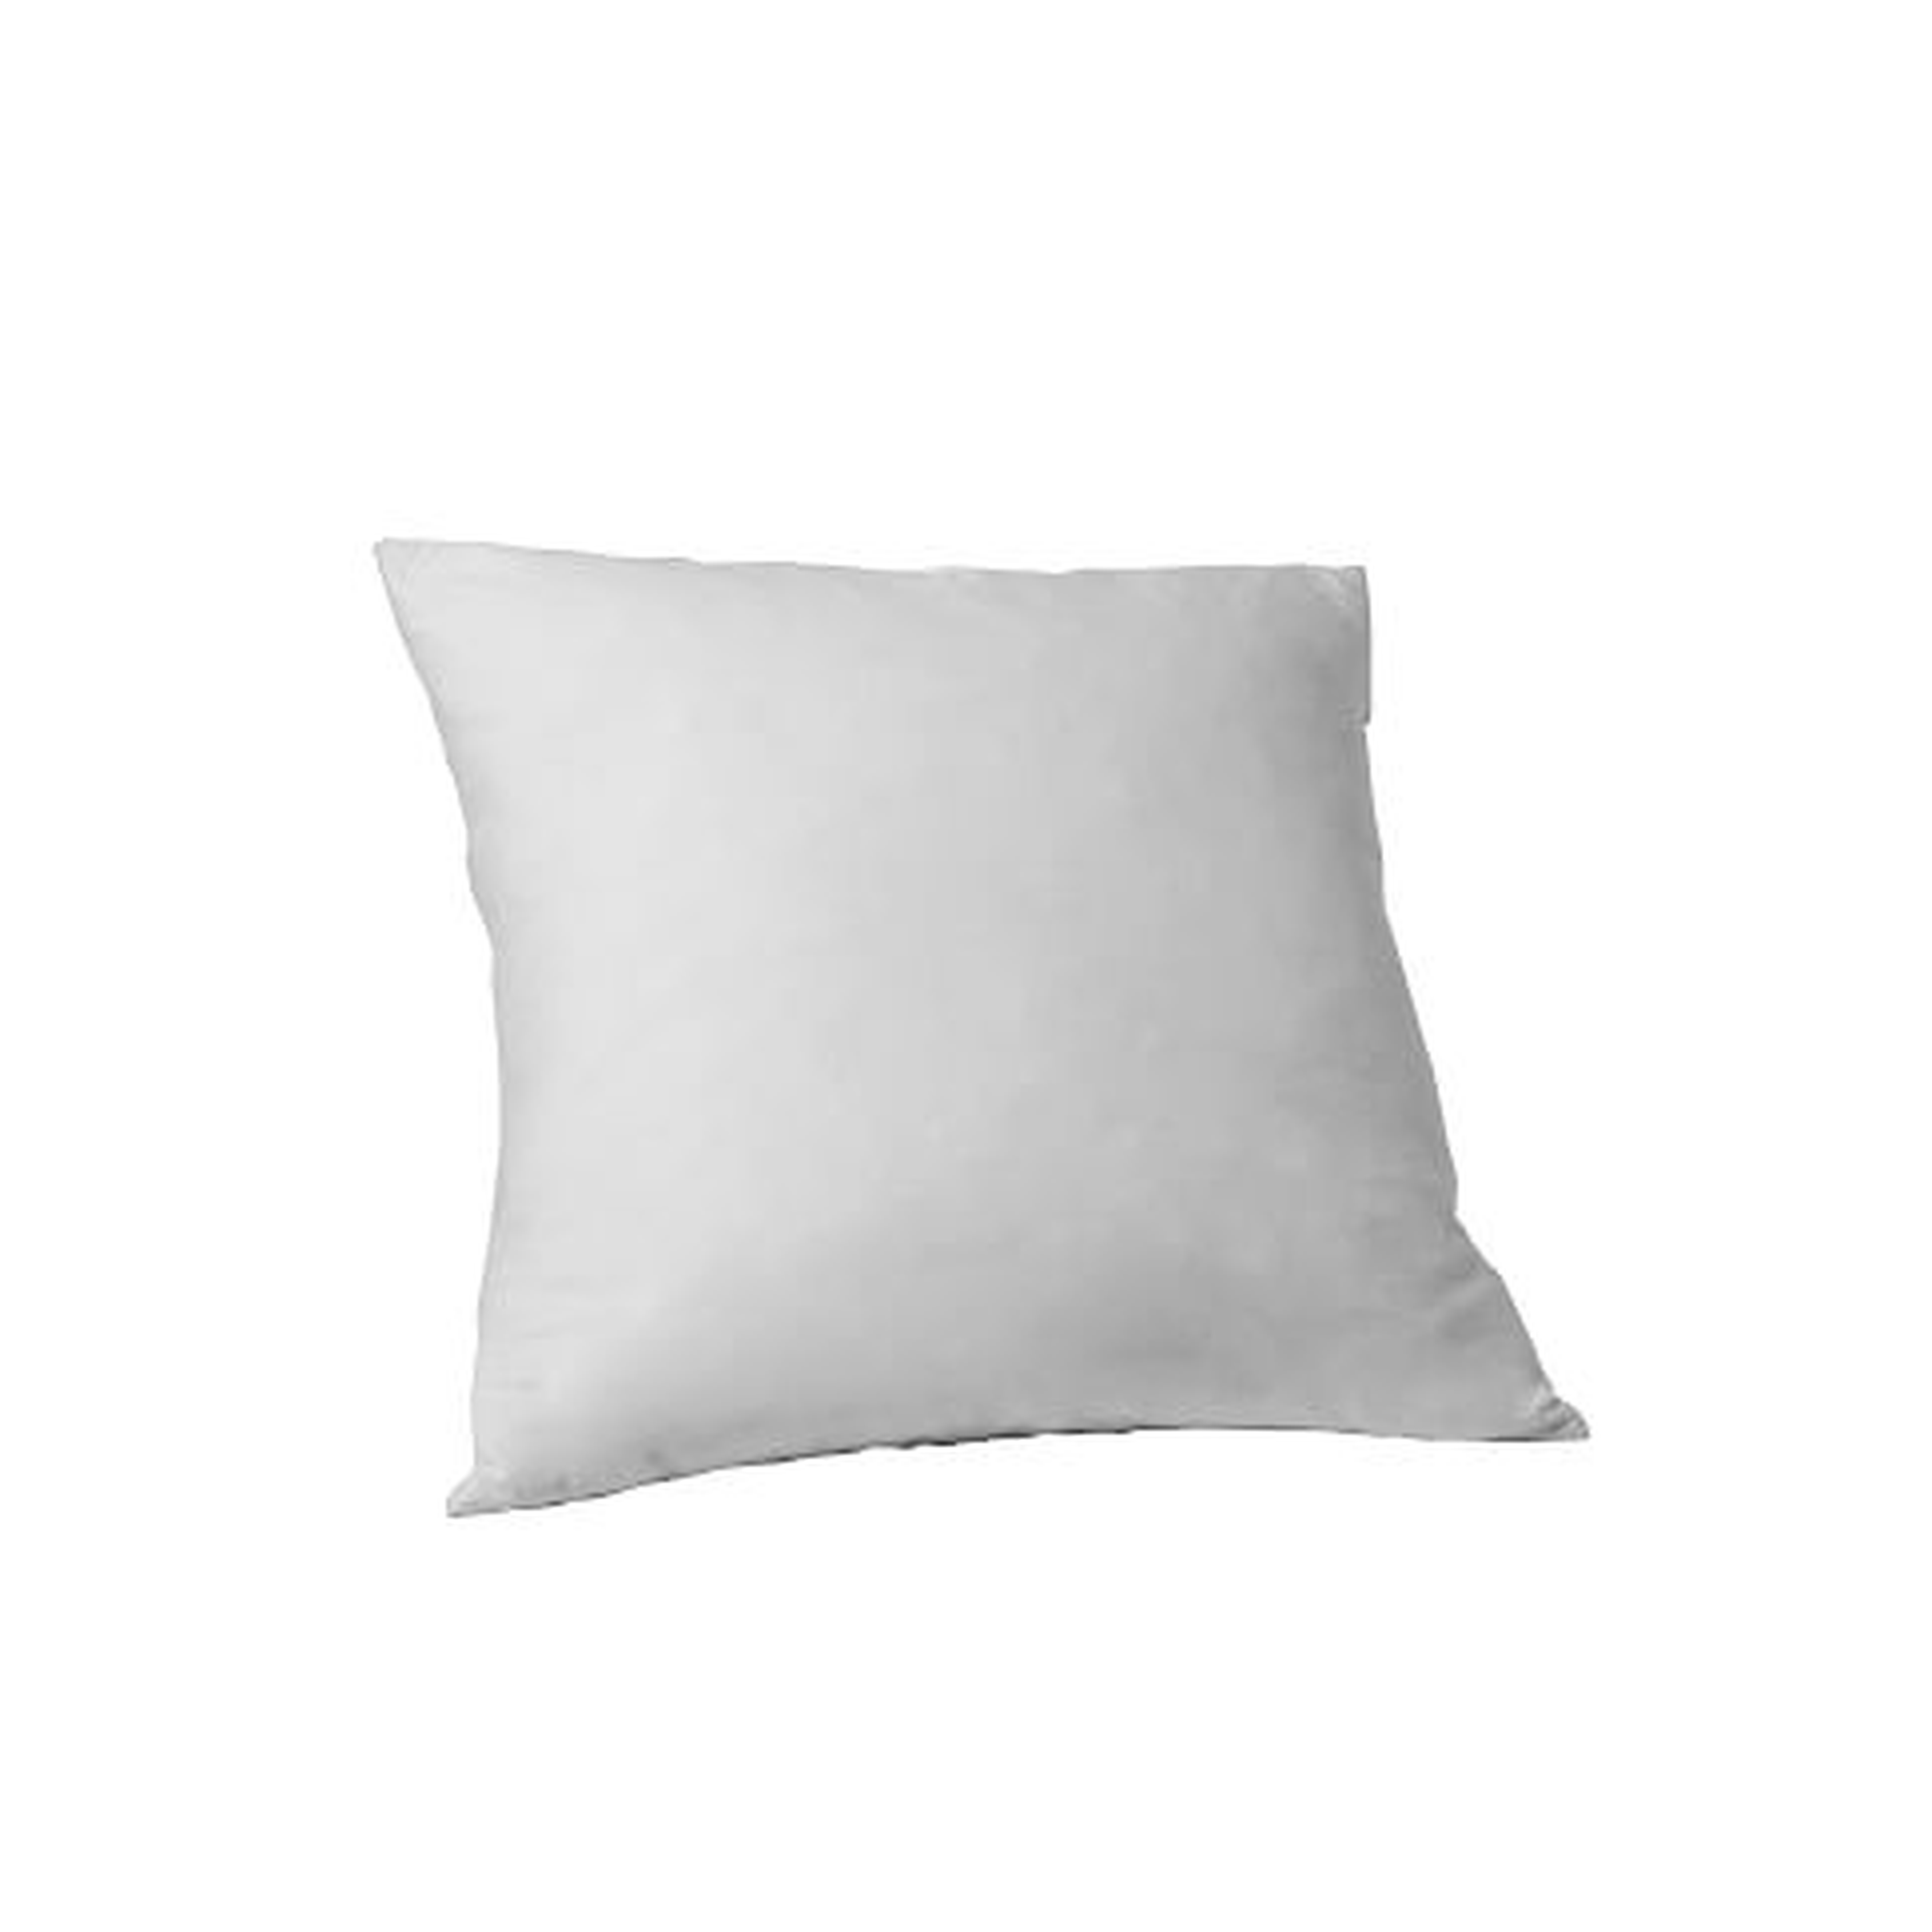 Decorative Pillow Insert - 18" sq - West Elm